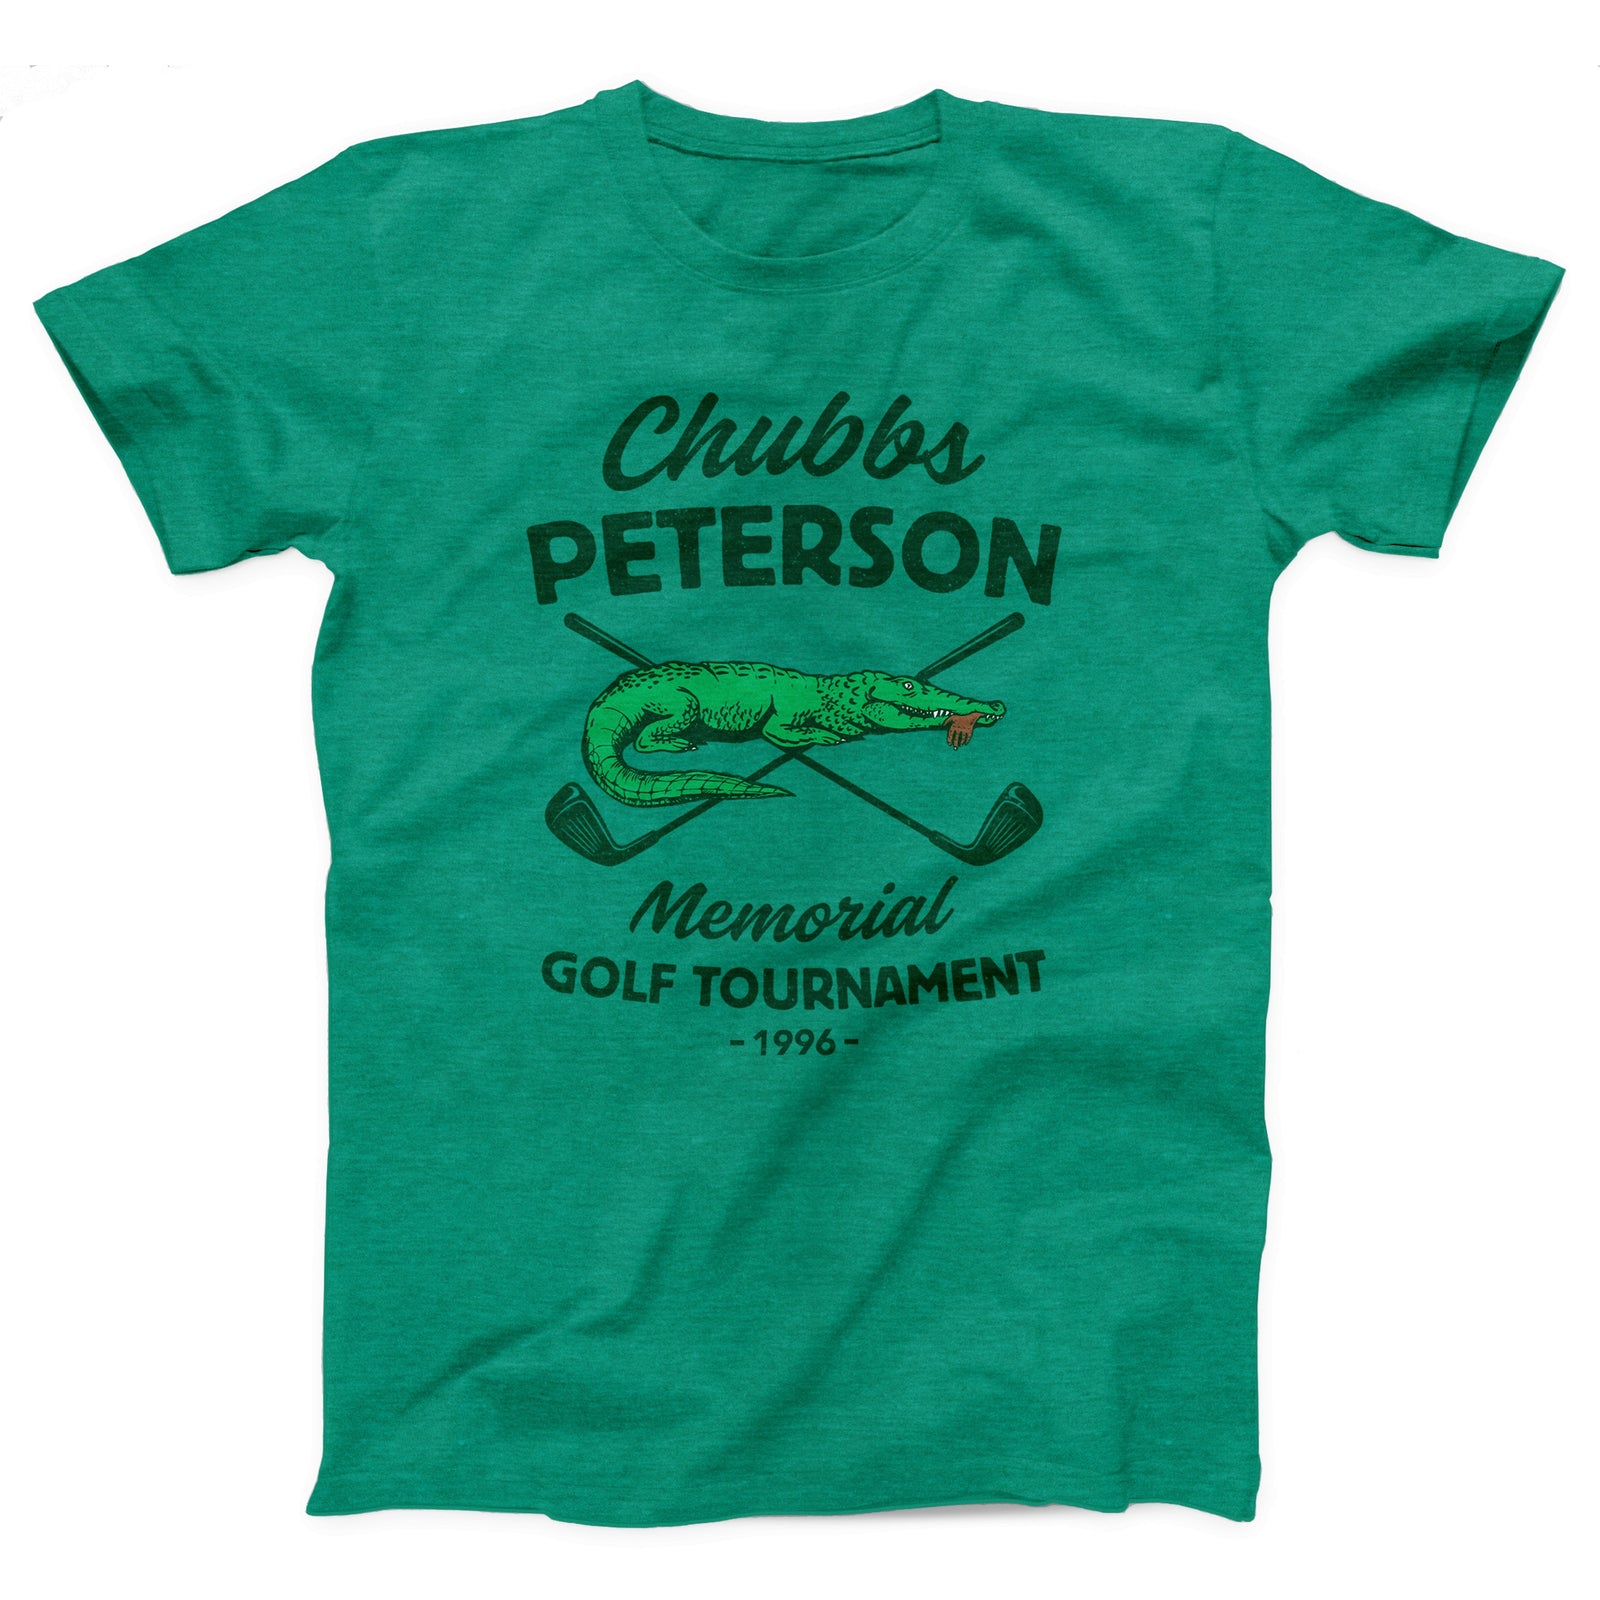 //cdn.shopify.com/s/files/1/0274/2488/2766/products/chubbs-peterson-memorial-golf-tournament-menunisex-t-shirt-293082_5000x.jpg?v=1649437638 5000w,
    //cdn.shopify.com/s/files/1/0274/2488/2766/products/chubbs-peterson-memorial-golf-tournament-menunisex-t-shirt-293082_4500x.jpg?v=1649437638 4500w,
    //cdn.shopify.com/s/files/1/0274/2488/2766/products/chubbs-peterson-memorial-golf-tournament-menunisex-t-shirt-293082_4000x.jpg?v=1649437638 4000w,
    //cdn.shopify.com/s/files/1/0274/2488/2766/products/chubbs-peterson-memorial-golf-tournament-menunisex-t-shirt-293082_3500x.jpg?v=1649437638 3500w,
    //cdn.shopify.com/s/files/1/0274/2488/2766/products/chubbs-peterson-memorial-golf-tournament-menunisex-t-shirt-293082_3000x.jpg?v=1649437638 3000w,
    //cdn.shopify.com/s/files/1/0274/2488/2766/products/chubbs-peterson-memorial-golf-tournament-menunisex-t-shirt-293082_2500x.jpg?v=1649437638 2500w,
    //cdn.shopify.com/s/files/1/0274/2488/2766/products/chubbs-peterson-memorial-golf-tournament-menunisex-t-shirt-293082_2000x.jpg?v=1649437638 2000w,
    //cdn.shopify.com/s/files/1/0274/2488/2766/products/chubbs-peterson-memorial-golf-tournament-menunisex-t-shirt-293082_1800x.jpg?v=1649437638 1800w,
    //cdn.shopify.com/s/files/1/0274/2488/2766/products/chubbs-peterson-memorial-golf-tournament-menunisex-t-shirt-293082_1600x.jpg?v=1649437638 1600w,
    //cdn.shopify.com/s/files/1/0274/2488/2766/products/chubbs-peterson-memorial-golf-tournament-menunisex-t-shirt-293082_1400x.jpg?v=1649437638 1400w,
    //cdn.shopify.com/s/files/1/0274/2488/2766/products/chubbs-peterson-memorial-golf-tournament-menunisex-t-shirt-293082_1200x.jpg?v=1649437638 1200w,
    //cdn.shopify.com/s/files/1/0274/2488/2766/products/chubbs-peterson-memorial-golf-tournament-menunisex-t-shirt-293082_1000x.jpg?v=1649437638 1000w,
    //cdn.shopify.com/s/files/1/0274/2488/2766/products/chubbs-peterson-memorial-golf-tournament-menunisex-t-shirt-293082_800x.jpg?v=1649437638 800w,
    //cdn.shopify.com/s/files/1/0274/2488/2766/products/chubbs-peterson-memorial-golf-tournament-menunisex-t-shirt-293082_600x.jpg?v=1649437638 600w,
    //cdn.shopify.com/s/files/1/0274/2488/2766/products/chubbs-peterson-memorial-golf-tournament-menunisex-t-shirt-293082_400x.jpg?v=1649437638 400w,
    //cdn.shopify.com/s/files/1/0274/2488/2766/products/chubbs-peterson-memorial-golf-tournament-menunisex-t-shirt-293082_200x.jpg?v=1649437638 200w